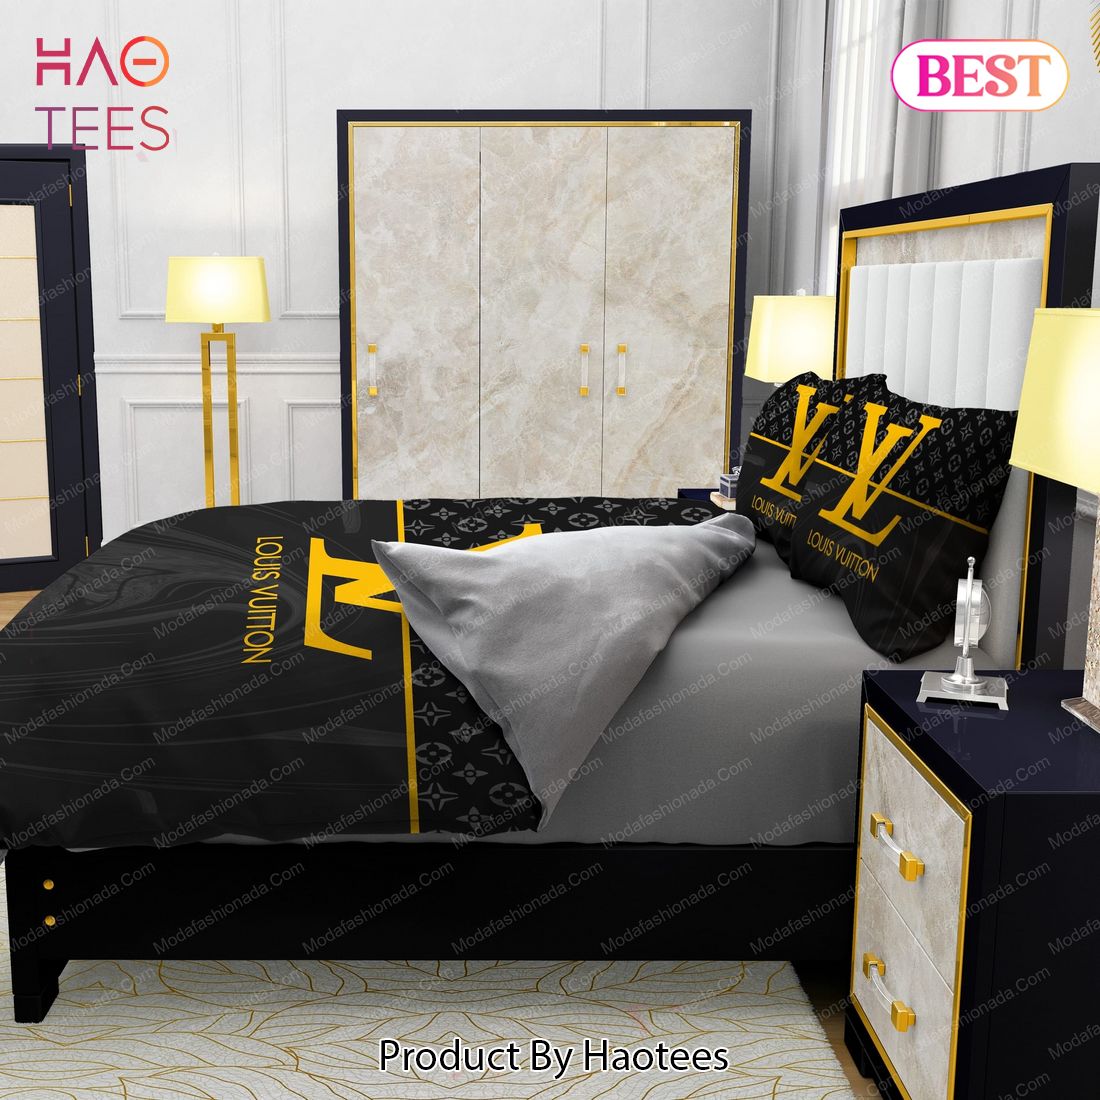 Black Veinstone And Gold Louis Vuitton Bedroom Duvet Cover Louis Vuitton  Bedding Set - Binteez